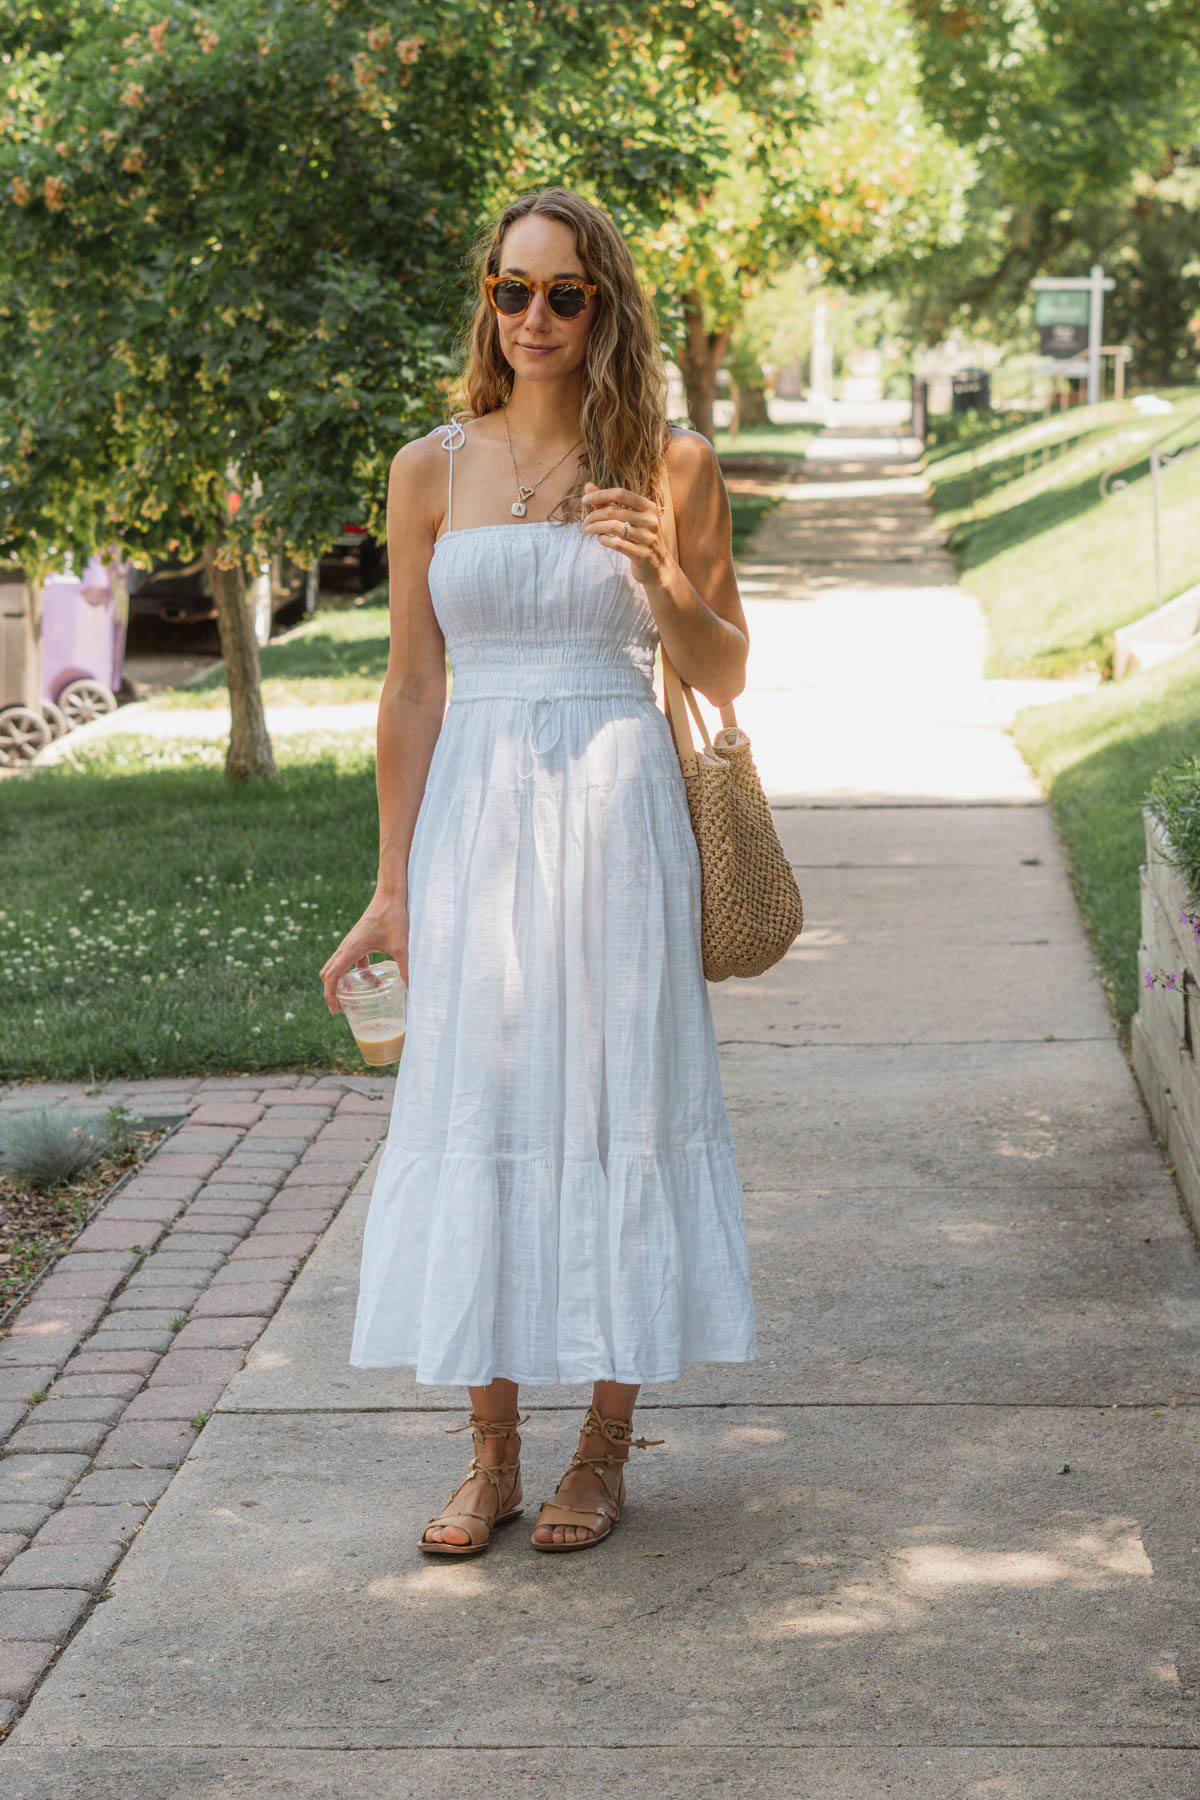 Best White Summer Dresses to Wear this Season